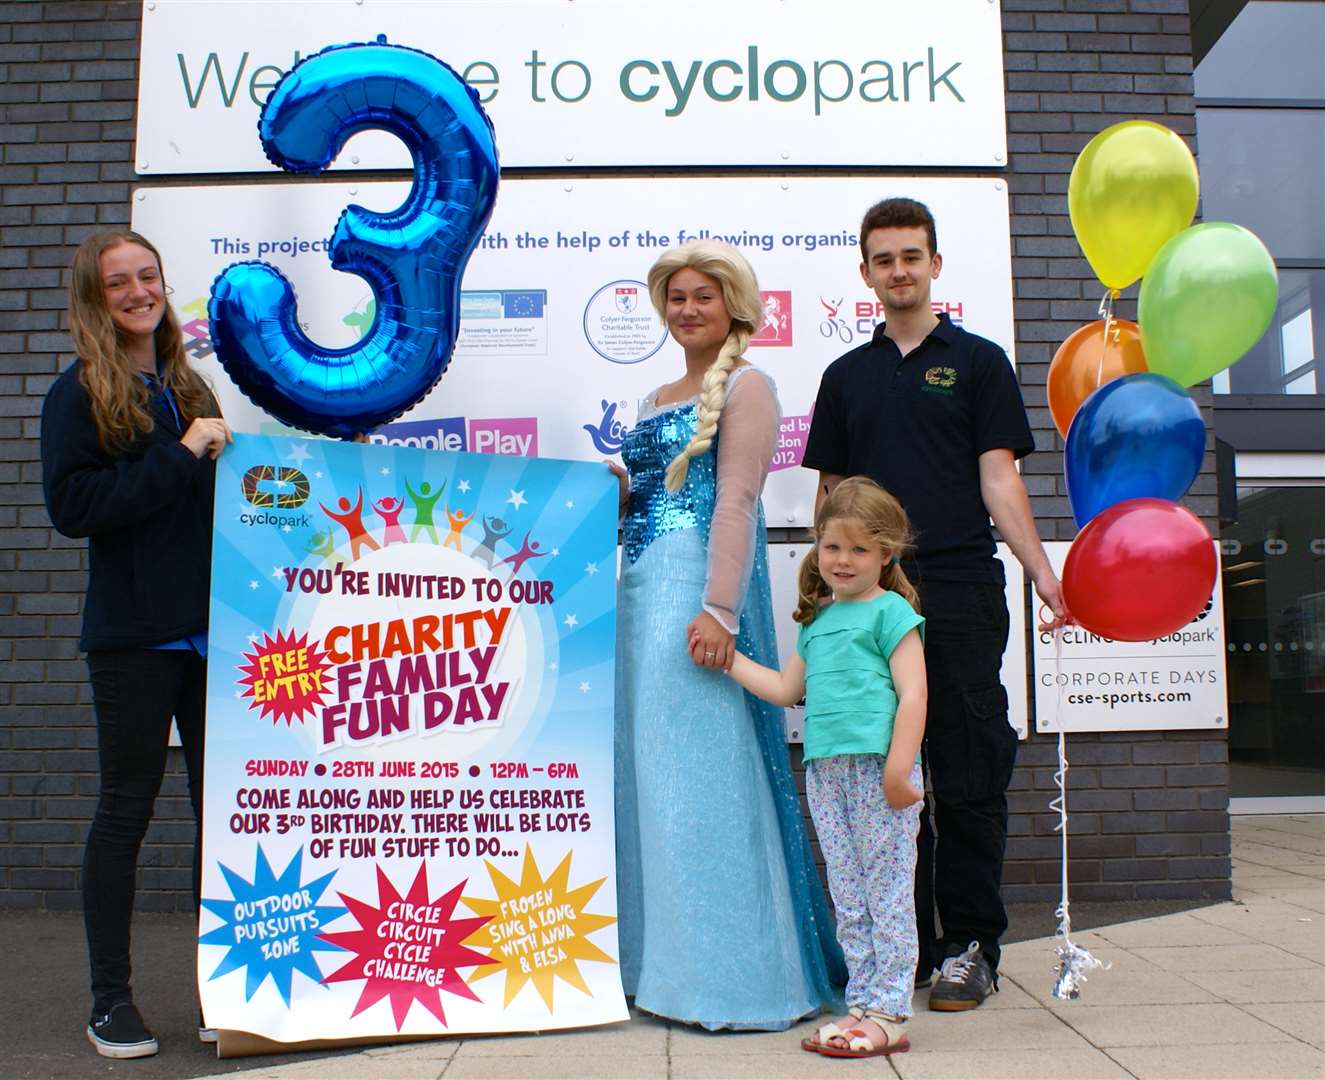 (left to right) Lizzy Pratt, Cyclopark receptionist, Princess Elsa from Frozen, Hattie Lloyd and Josh Allen Cyclopark recreational assistant